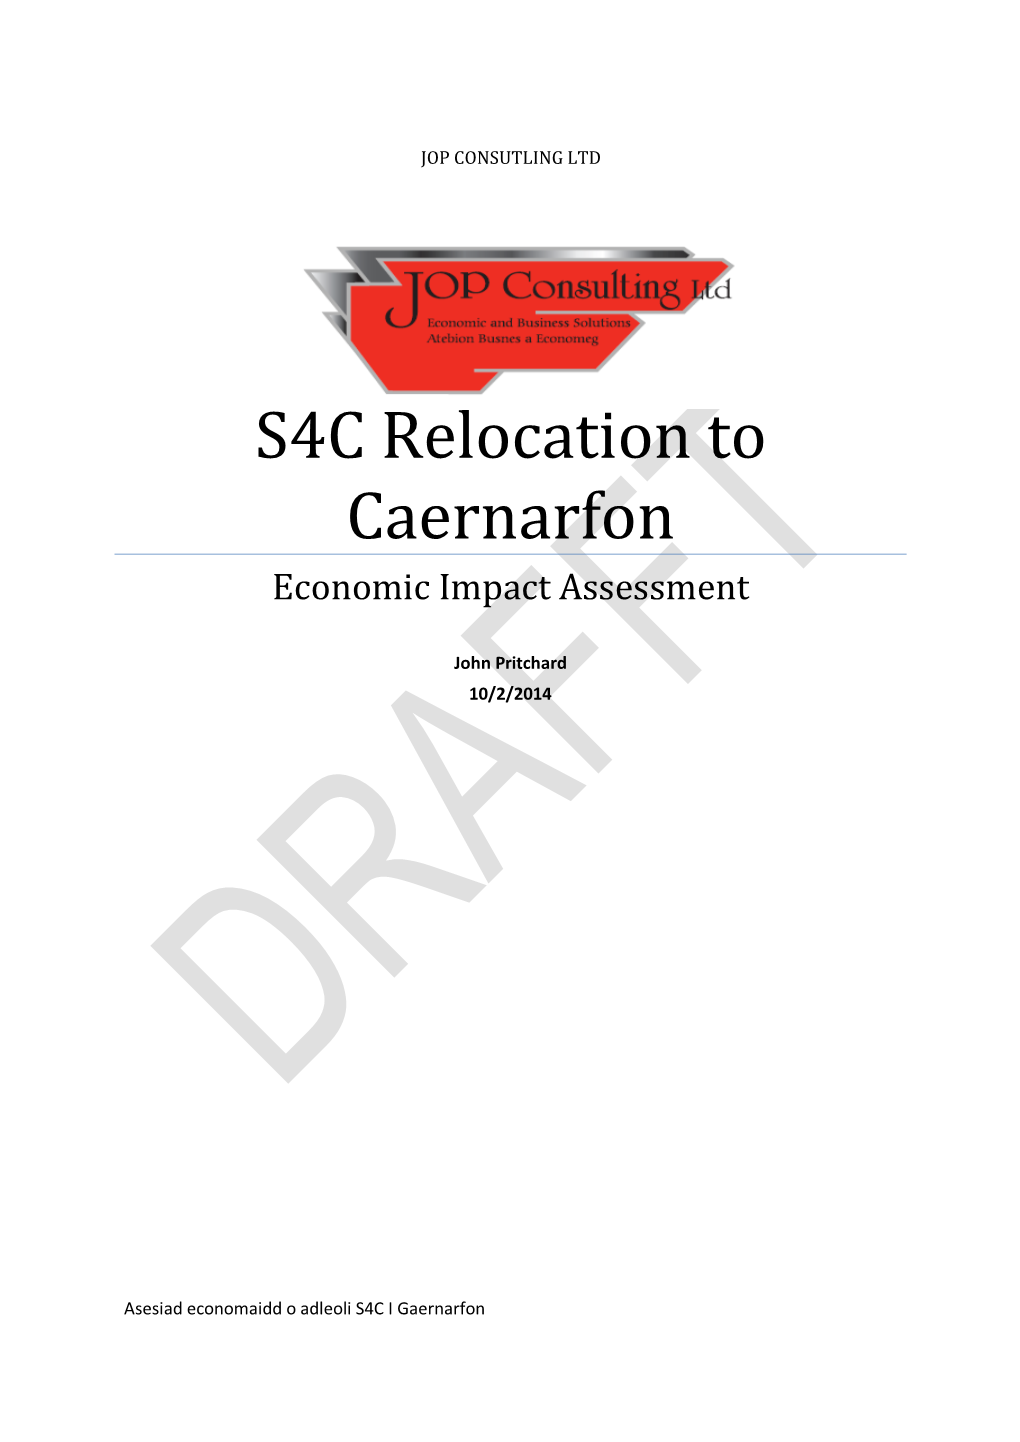 S4C Relocation to Caernarfon Economic Impact Assessment